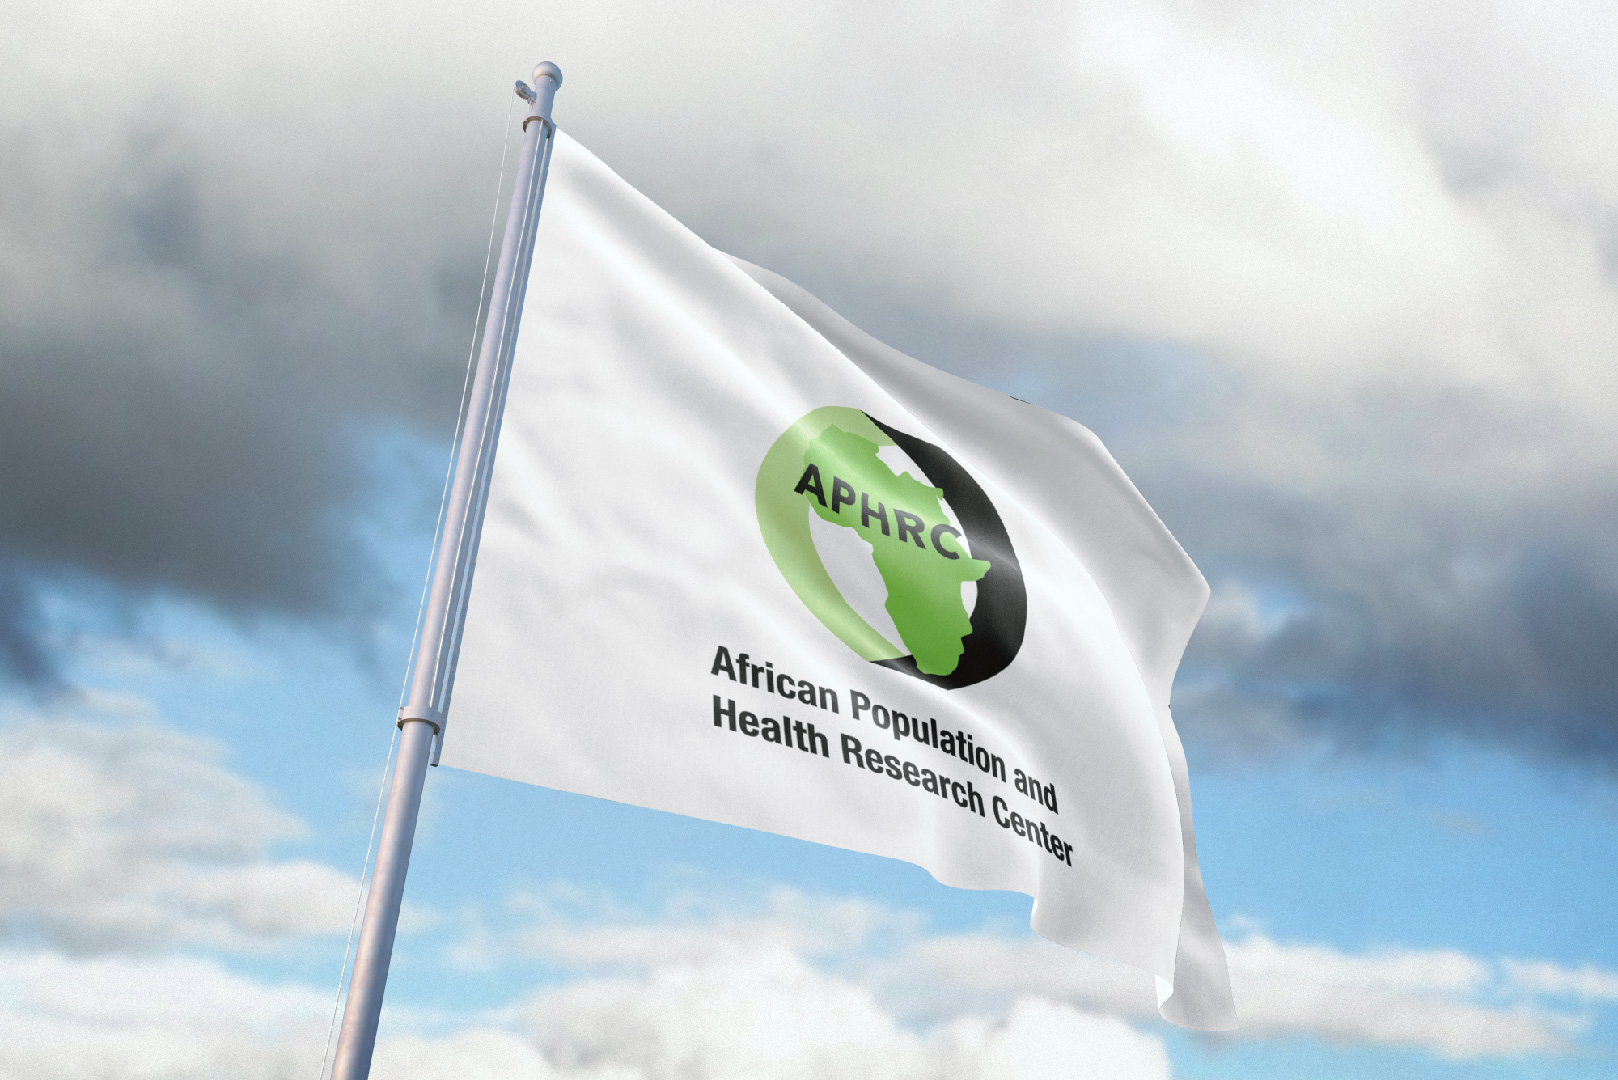 APHRC became an autonomous regional institute